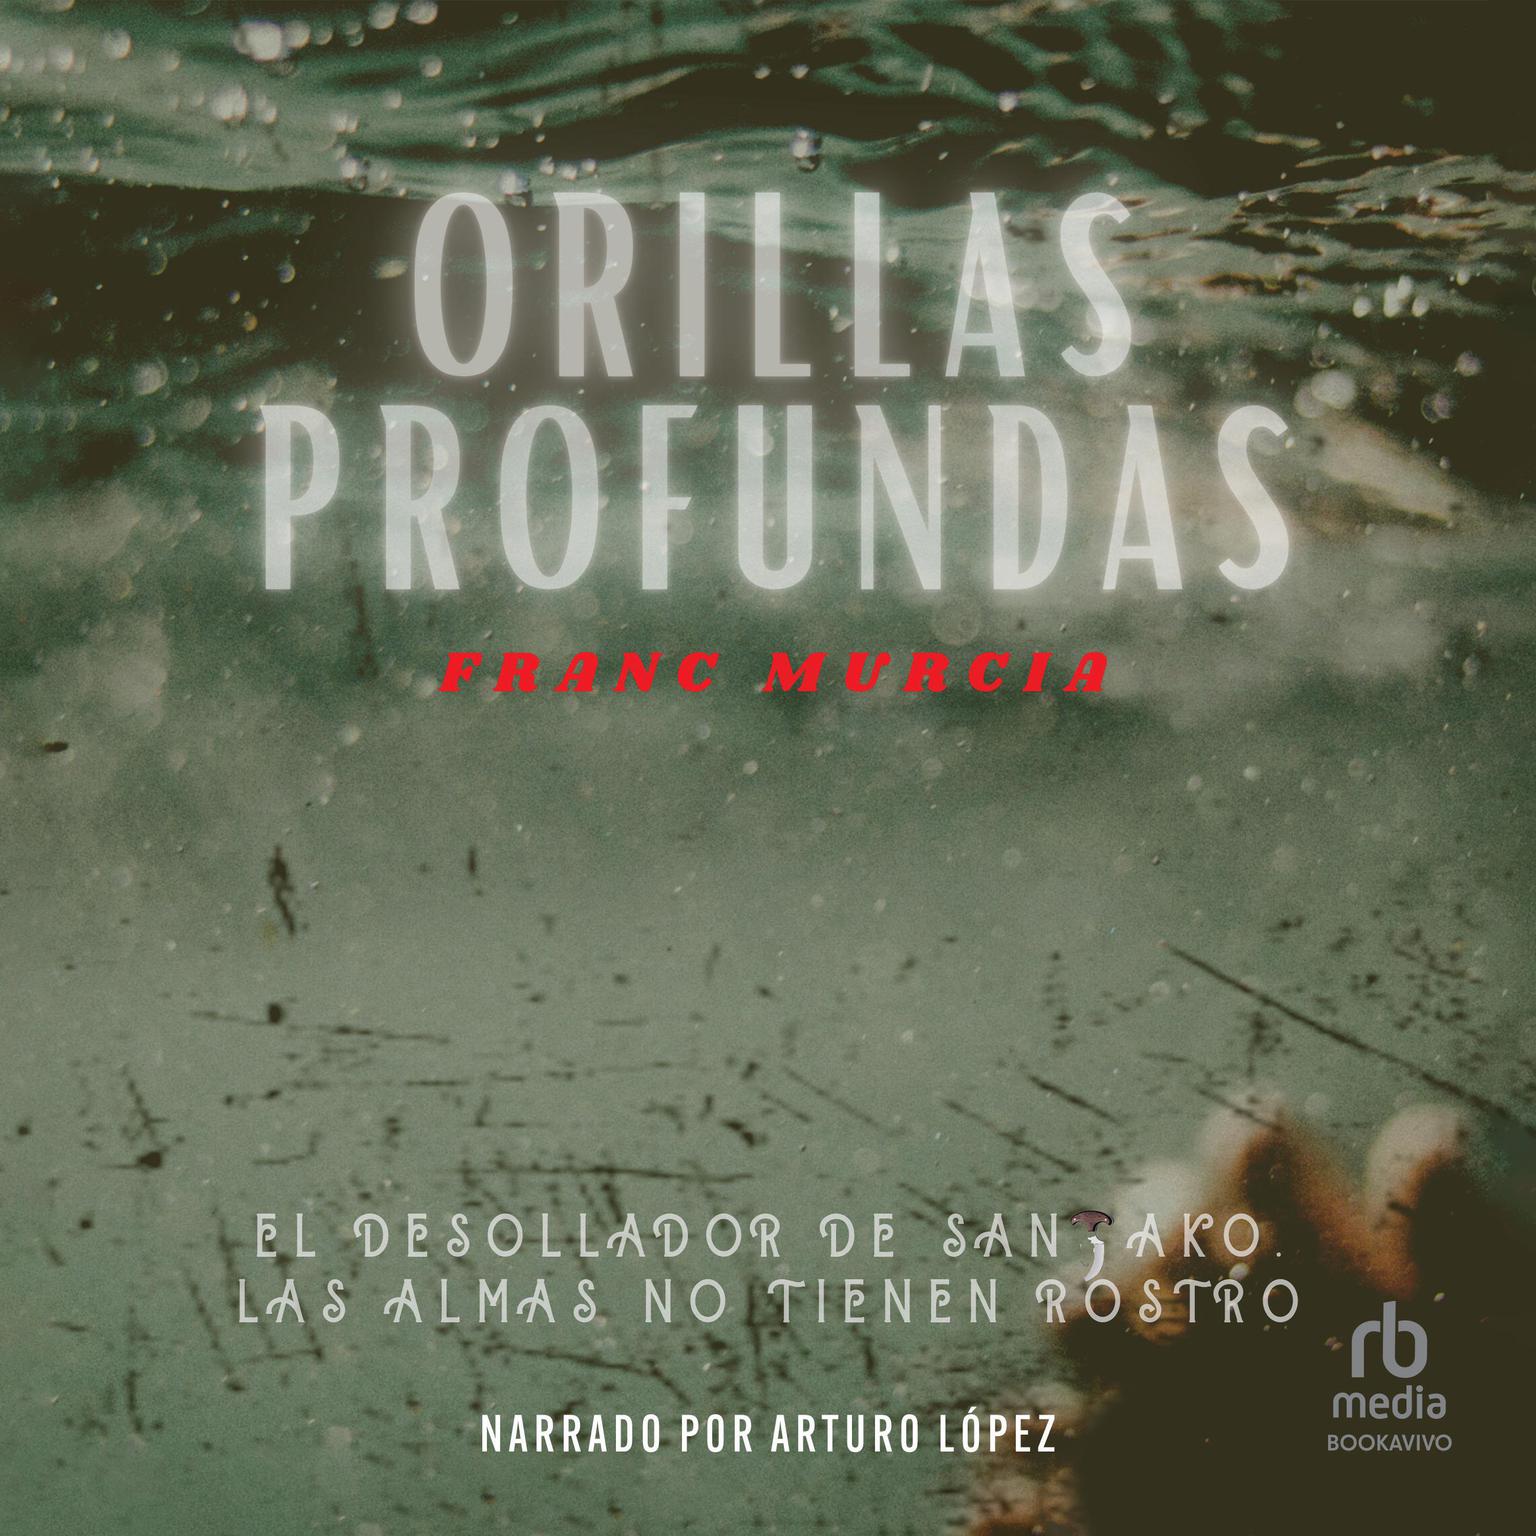 Orillas profundas Audiobook, by Franc Murcia